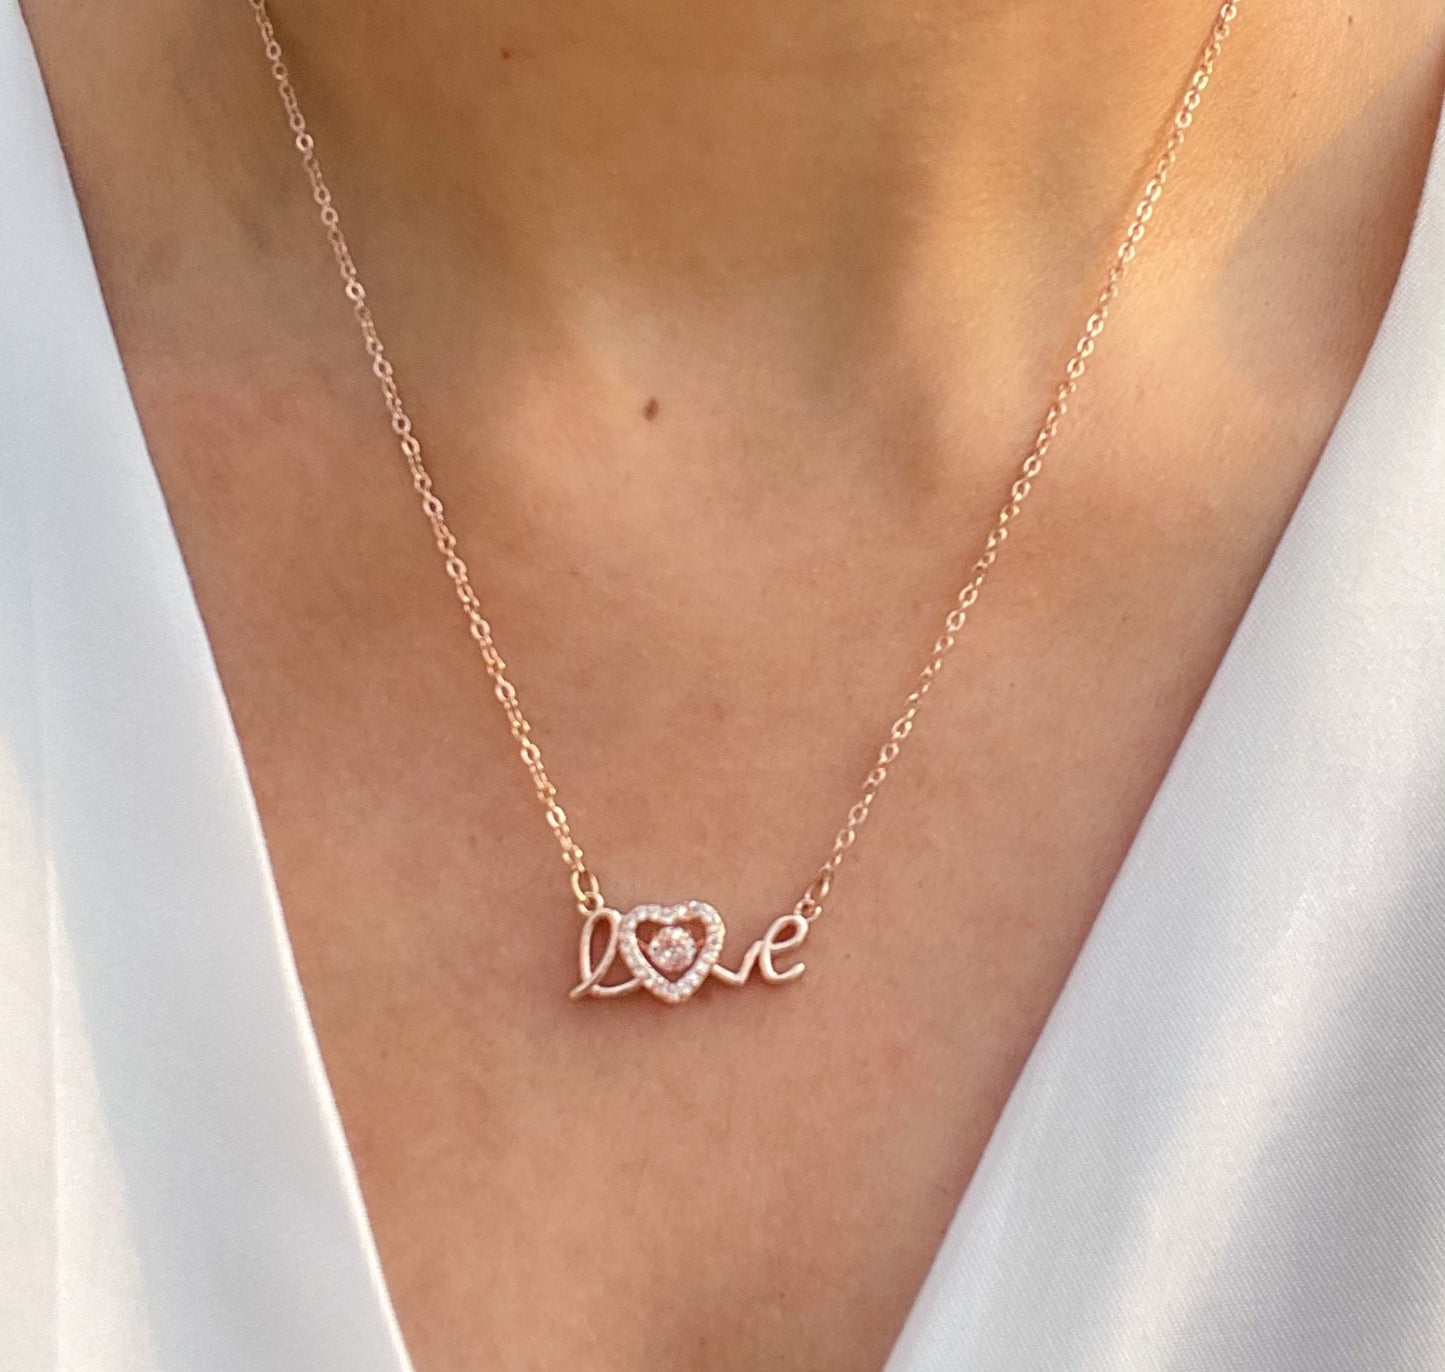 Evie Love Necklace